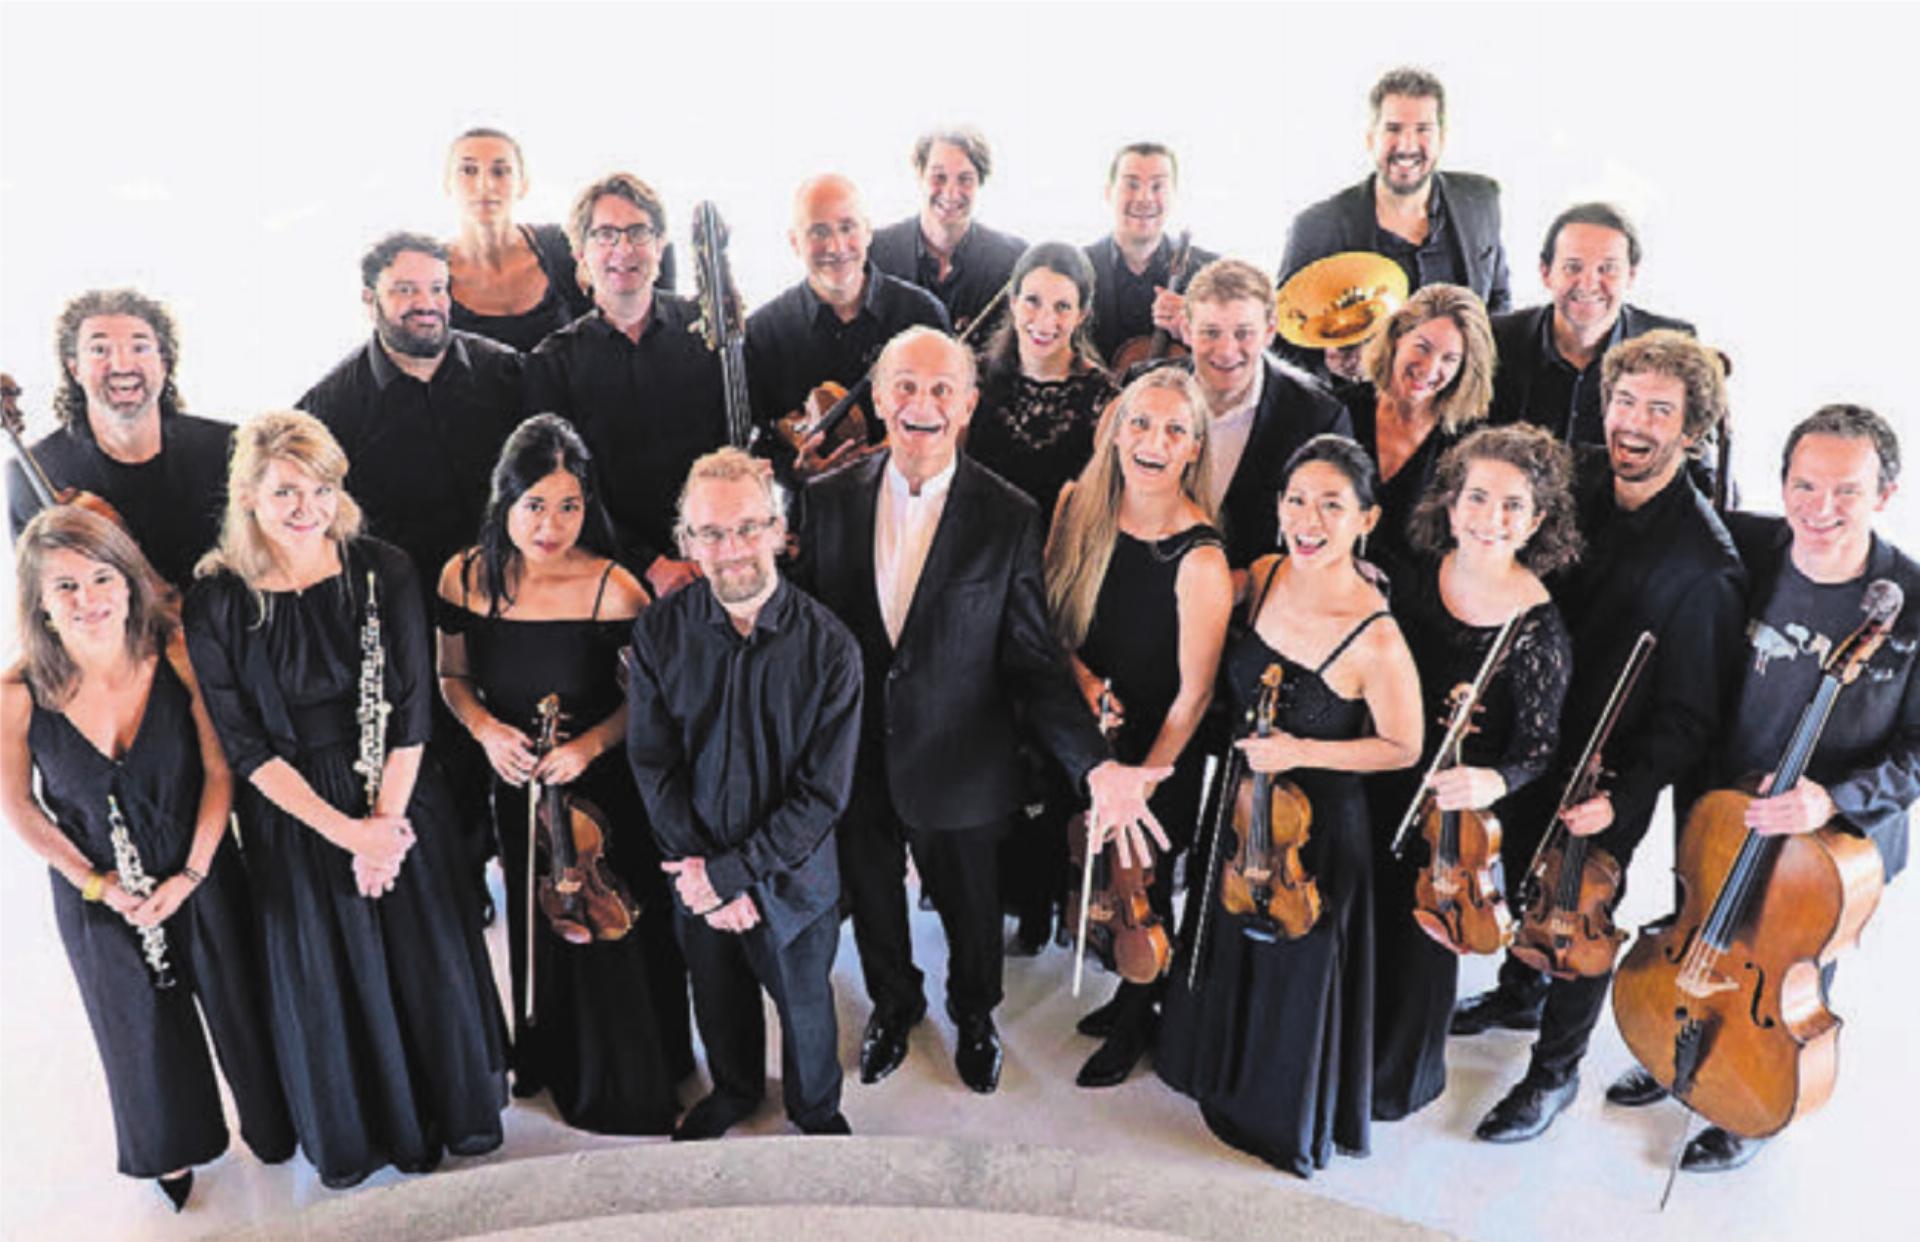 Das Ensemble «Chaarts» tritt am Sonntag in Boswil auf. Bild: zg